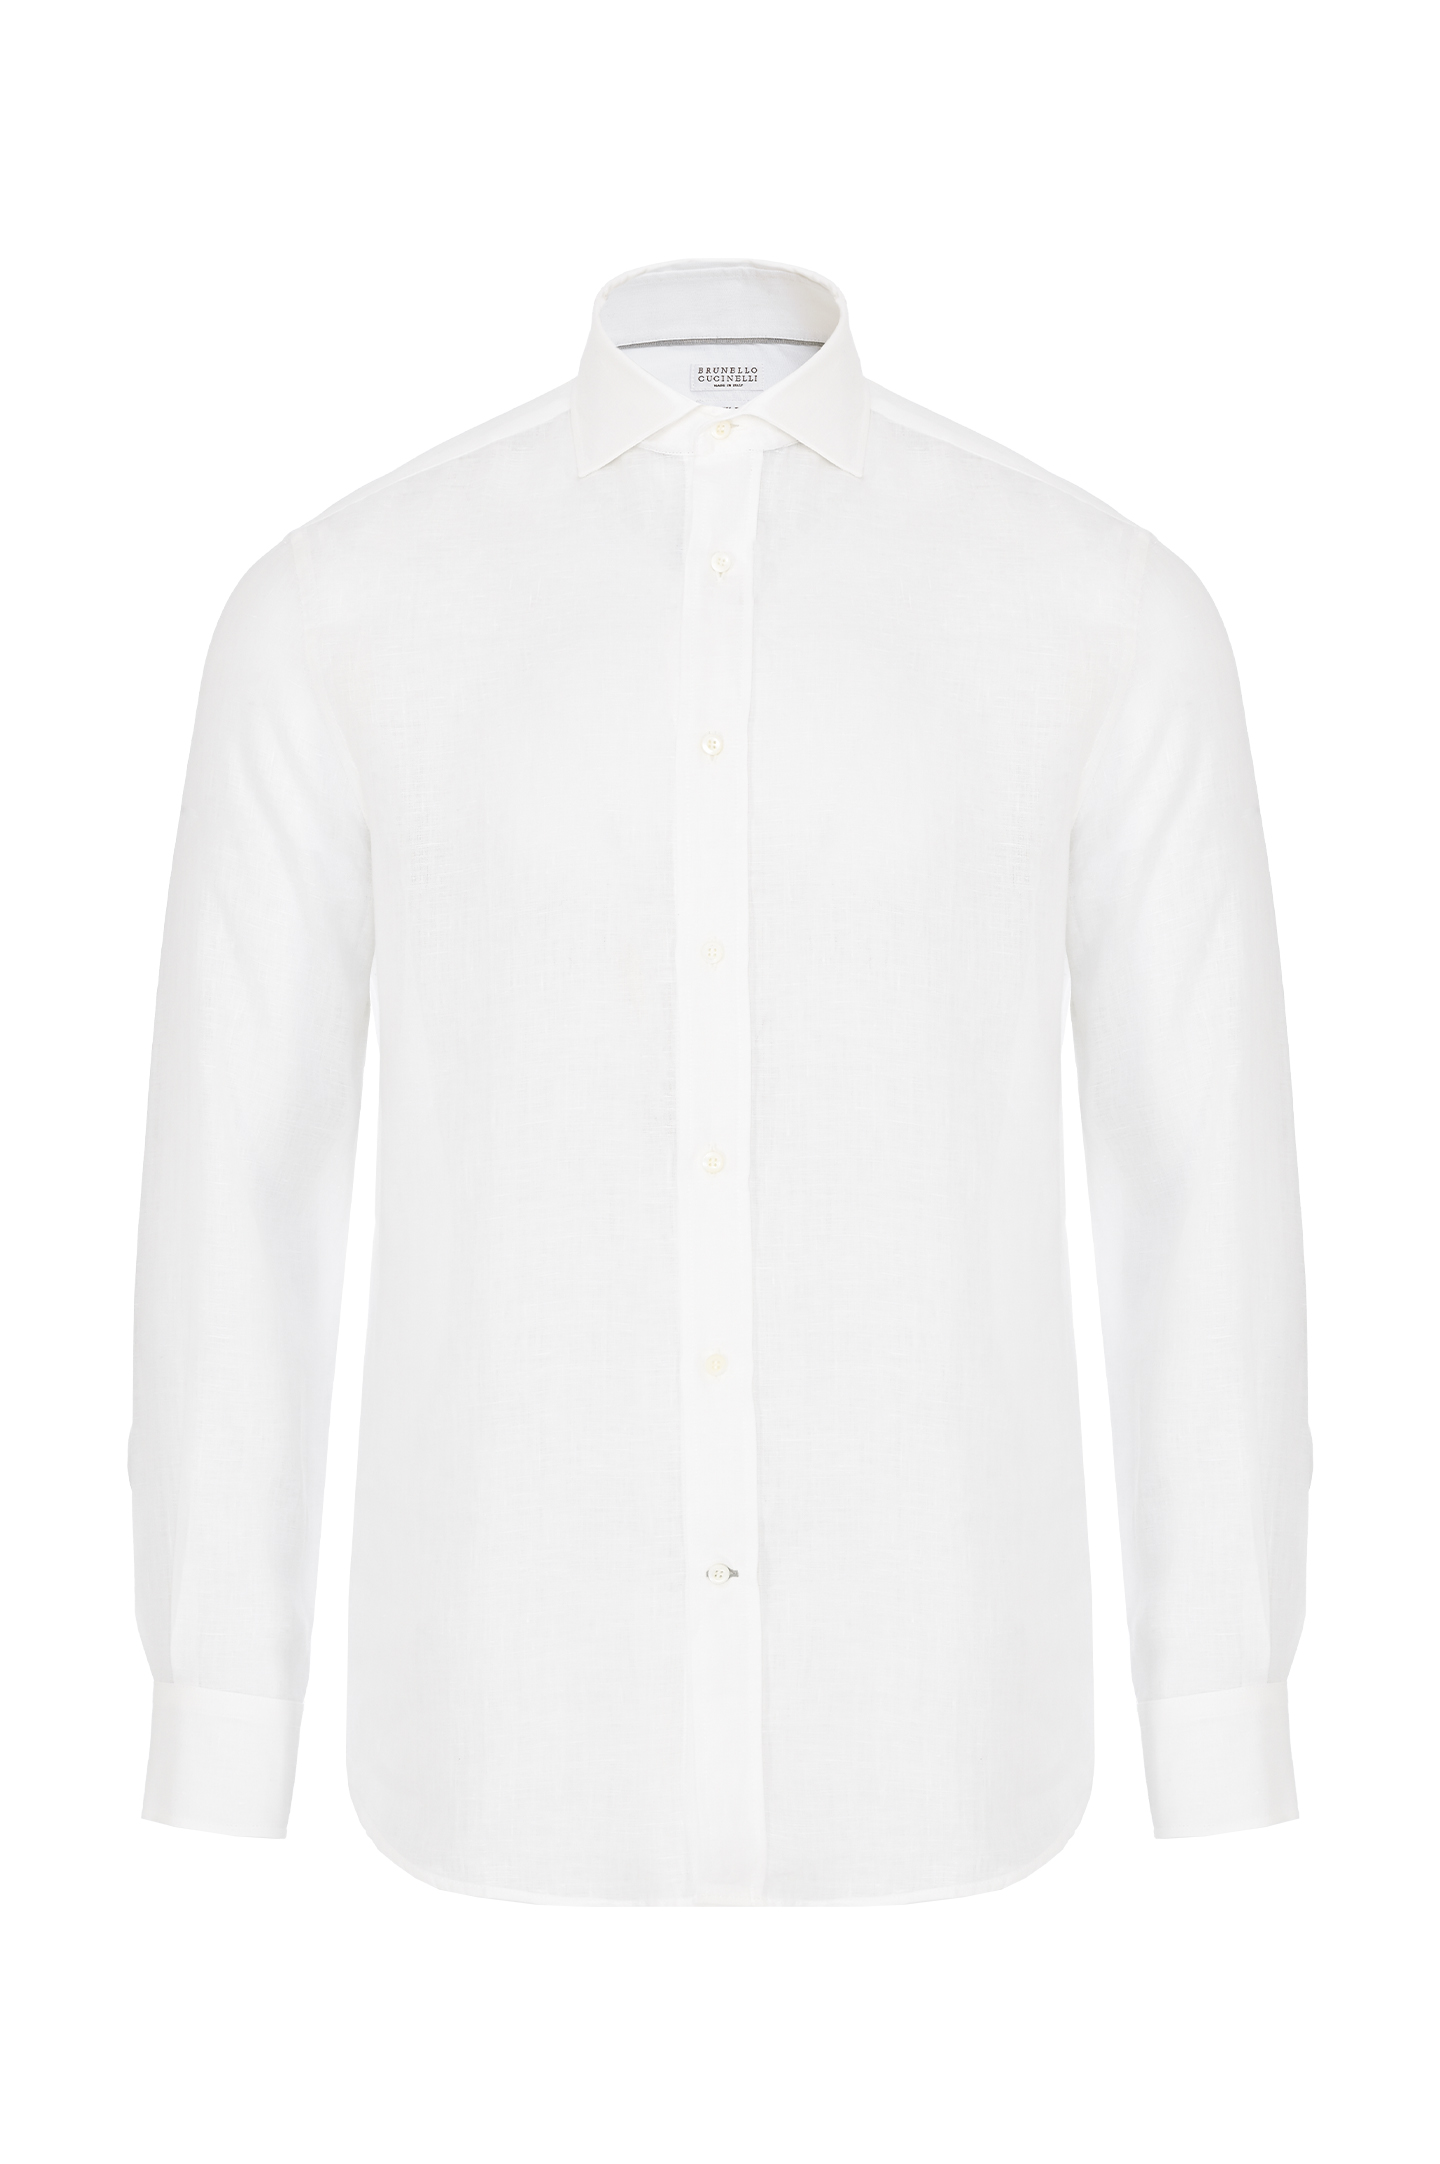 Рубашка BRUNELLO  CUCINELLI MB6500627, цвет: Белый, Мужской